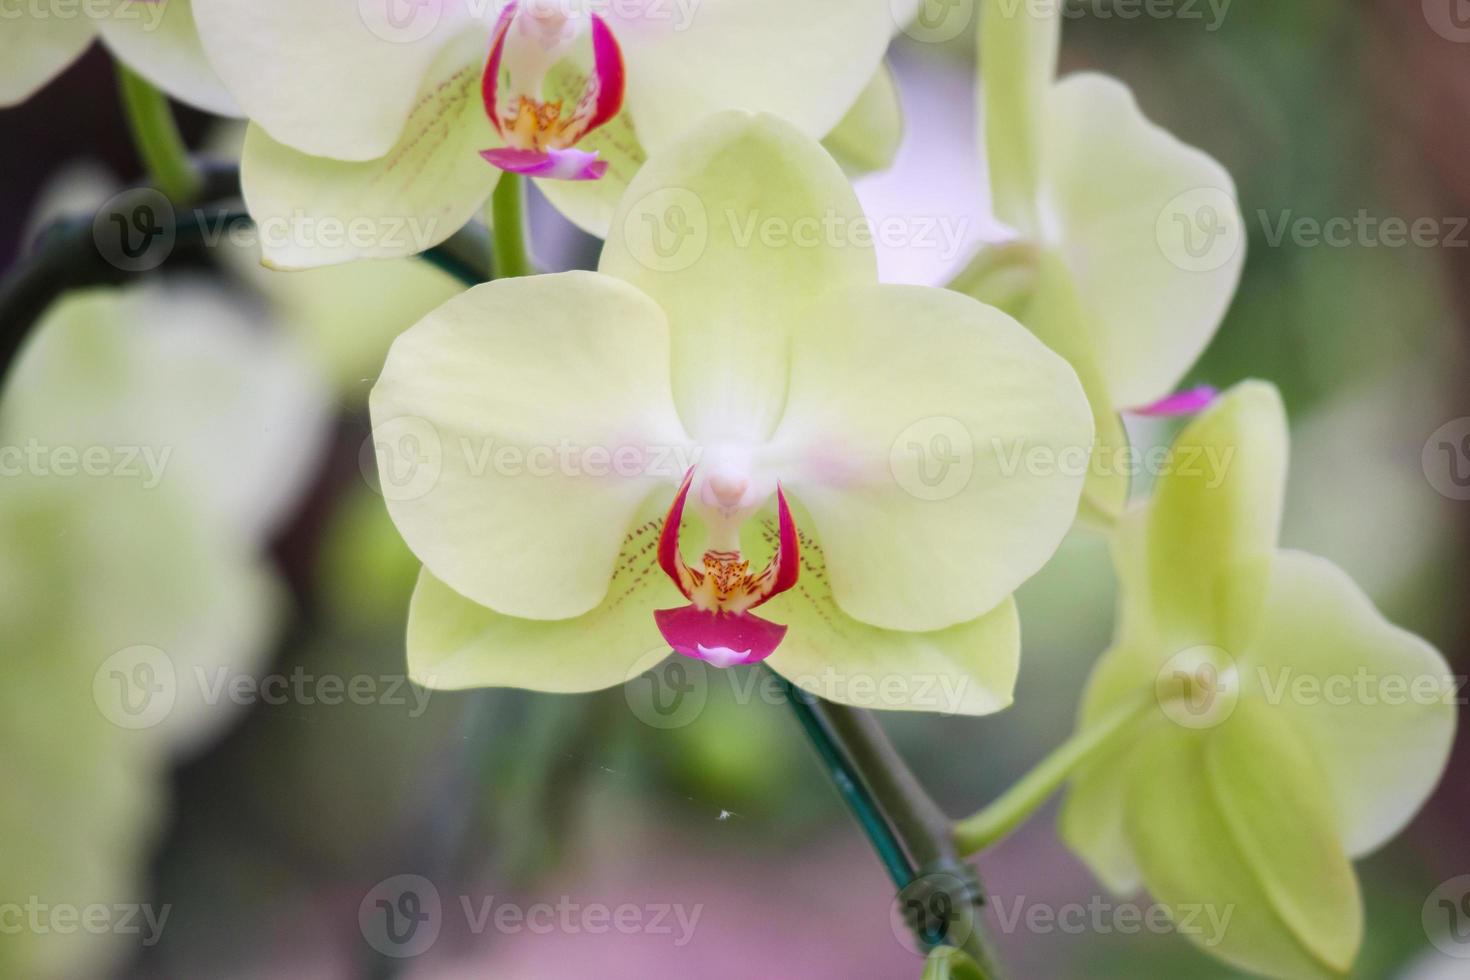 skön phalaenopsis orkide blomma blomning i trädgård blommig bakgrund foto